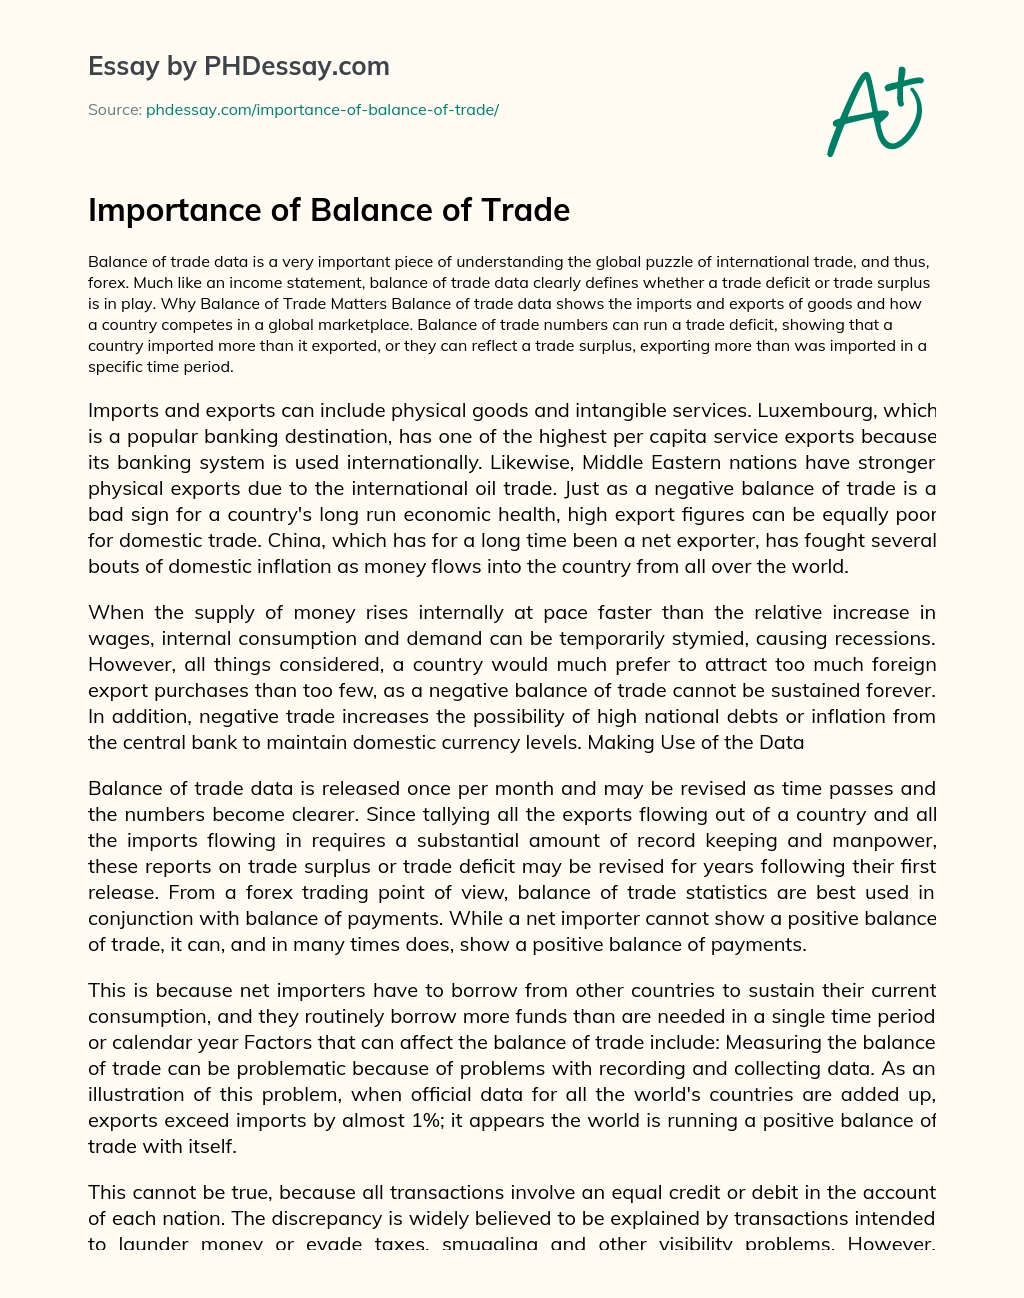 Importance of Balance of Trade essay